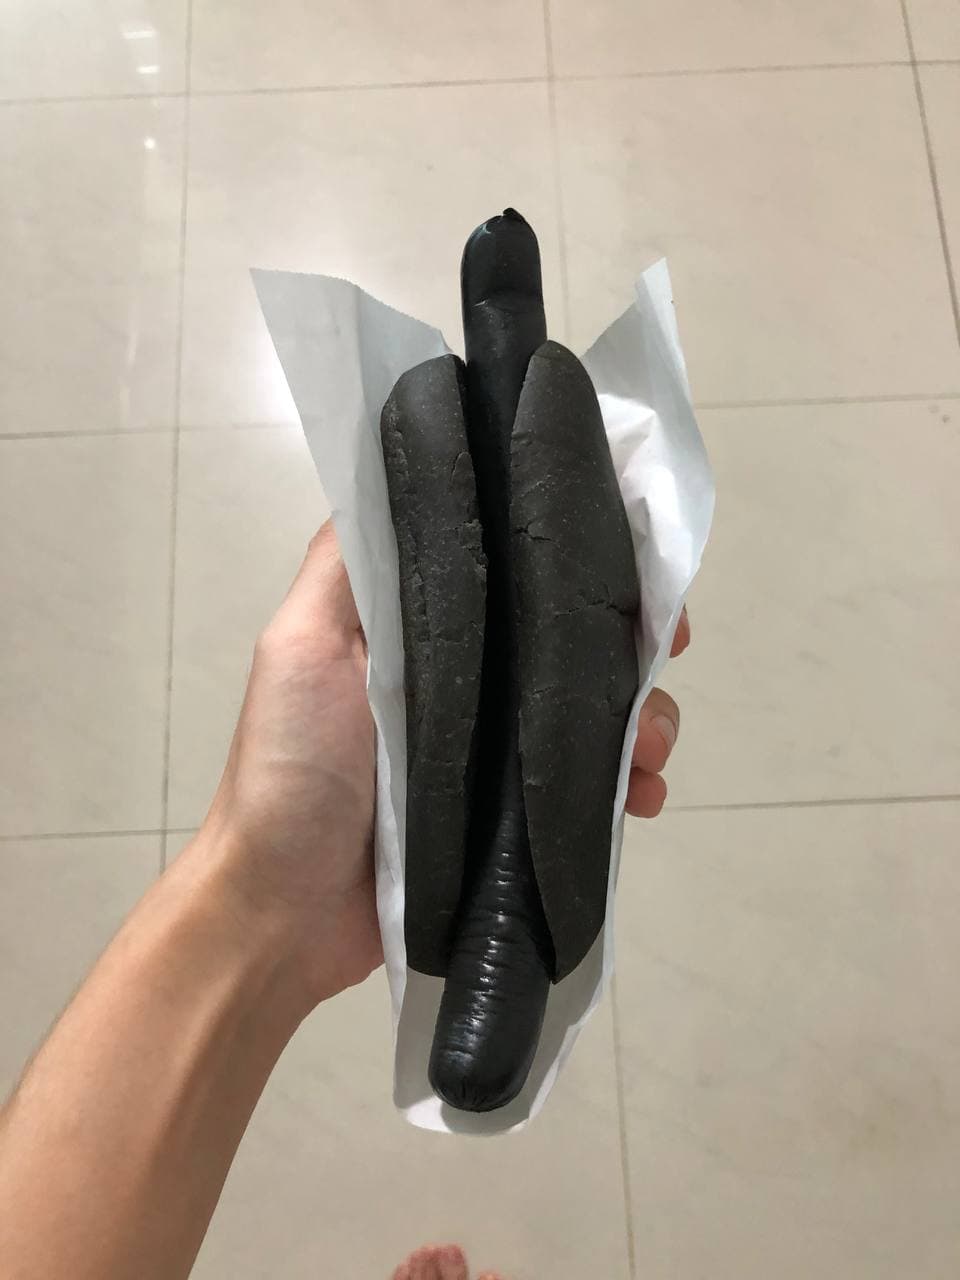 ikea charcoal hotdog black with bun